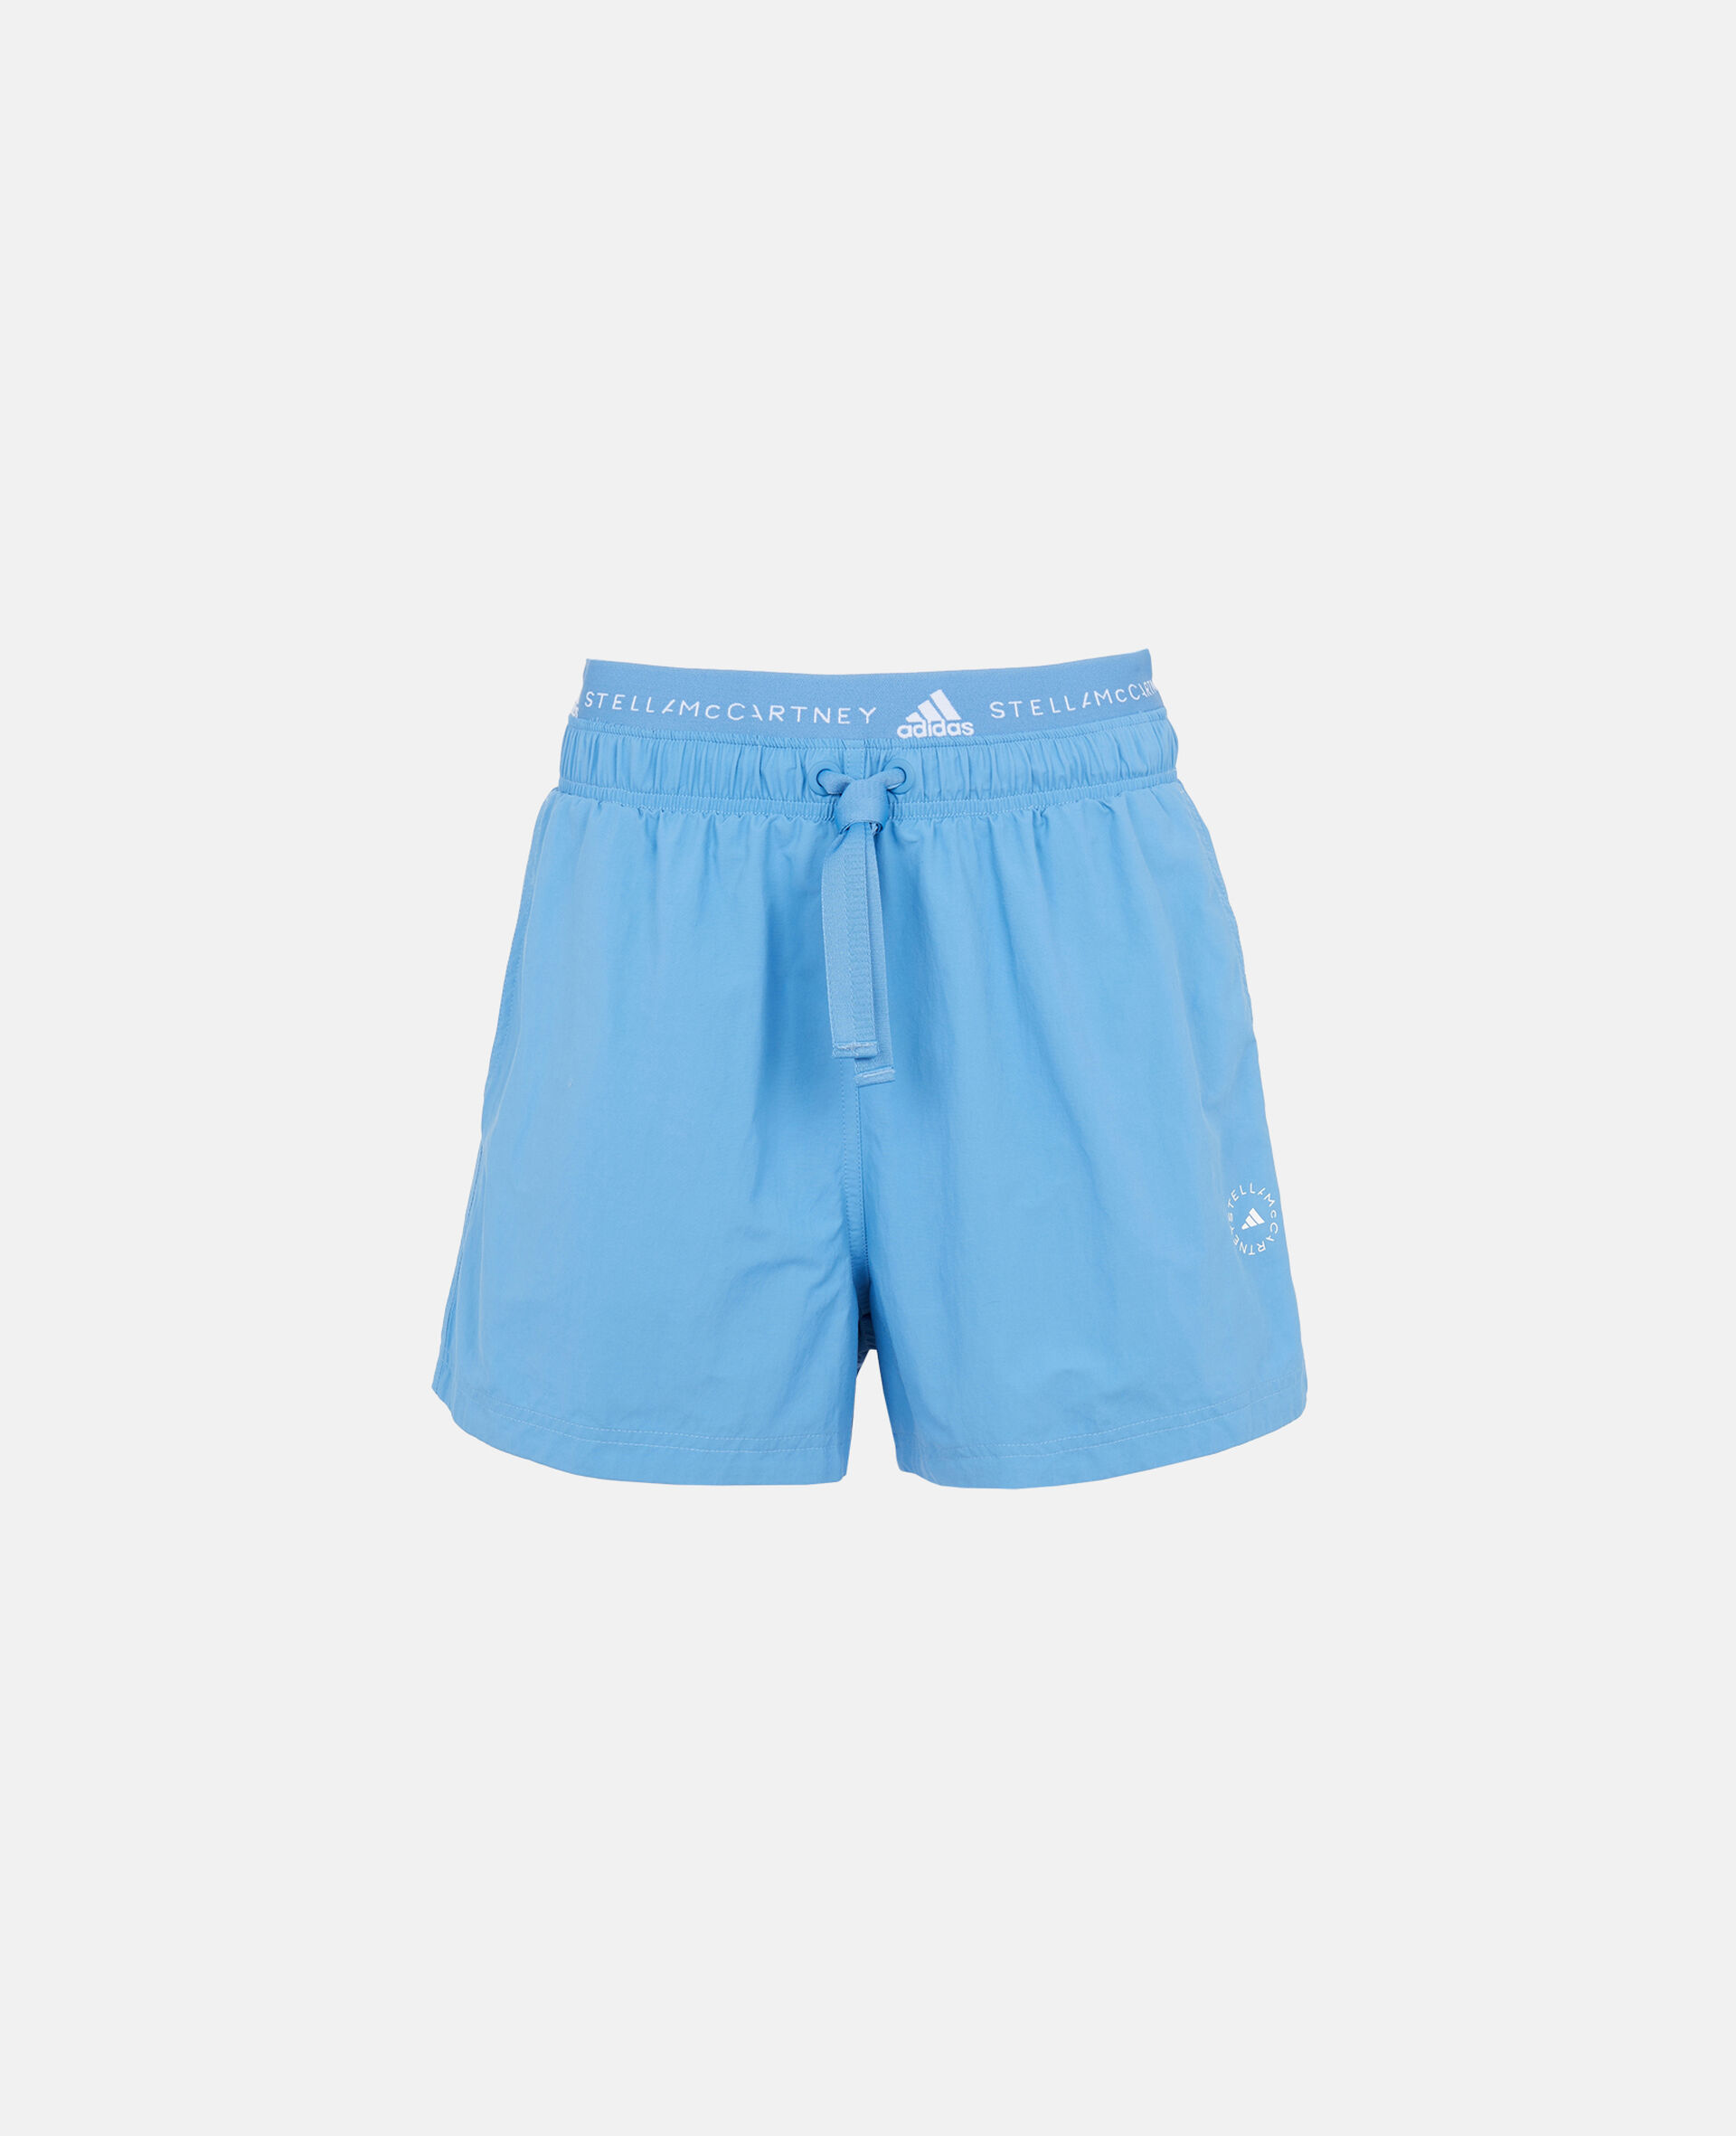 Blue Woven Shorts -Blue-large image number 0